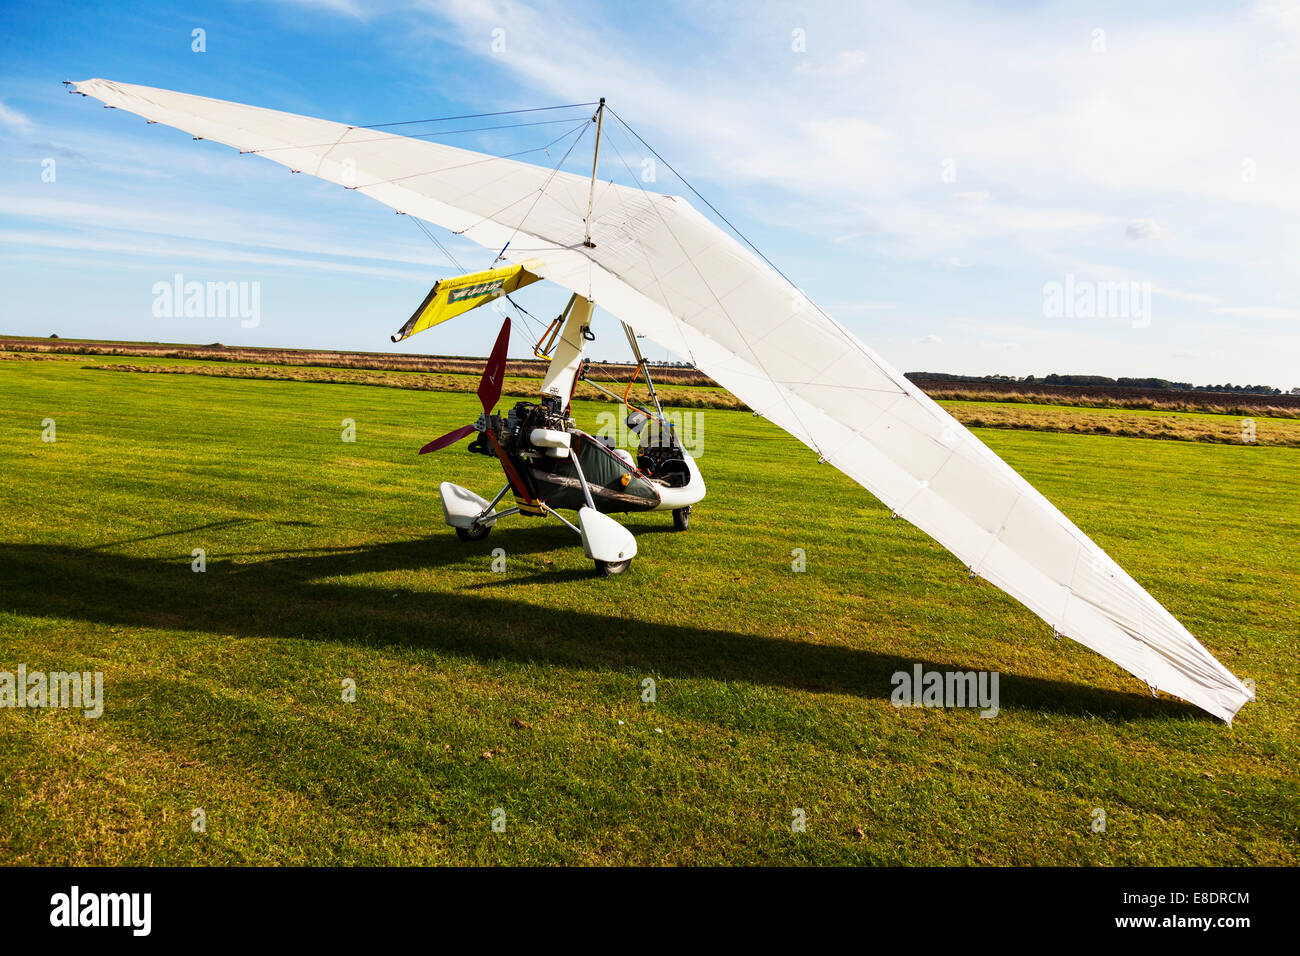 flex wing flexwing microlight single-seat flying machine on ground empty hobby pastime leisure activity Stock Photo